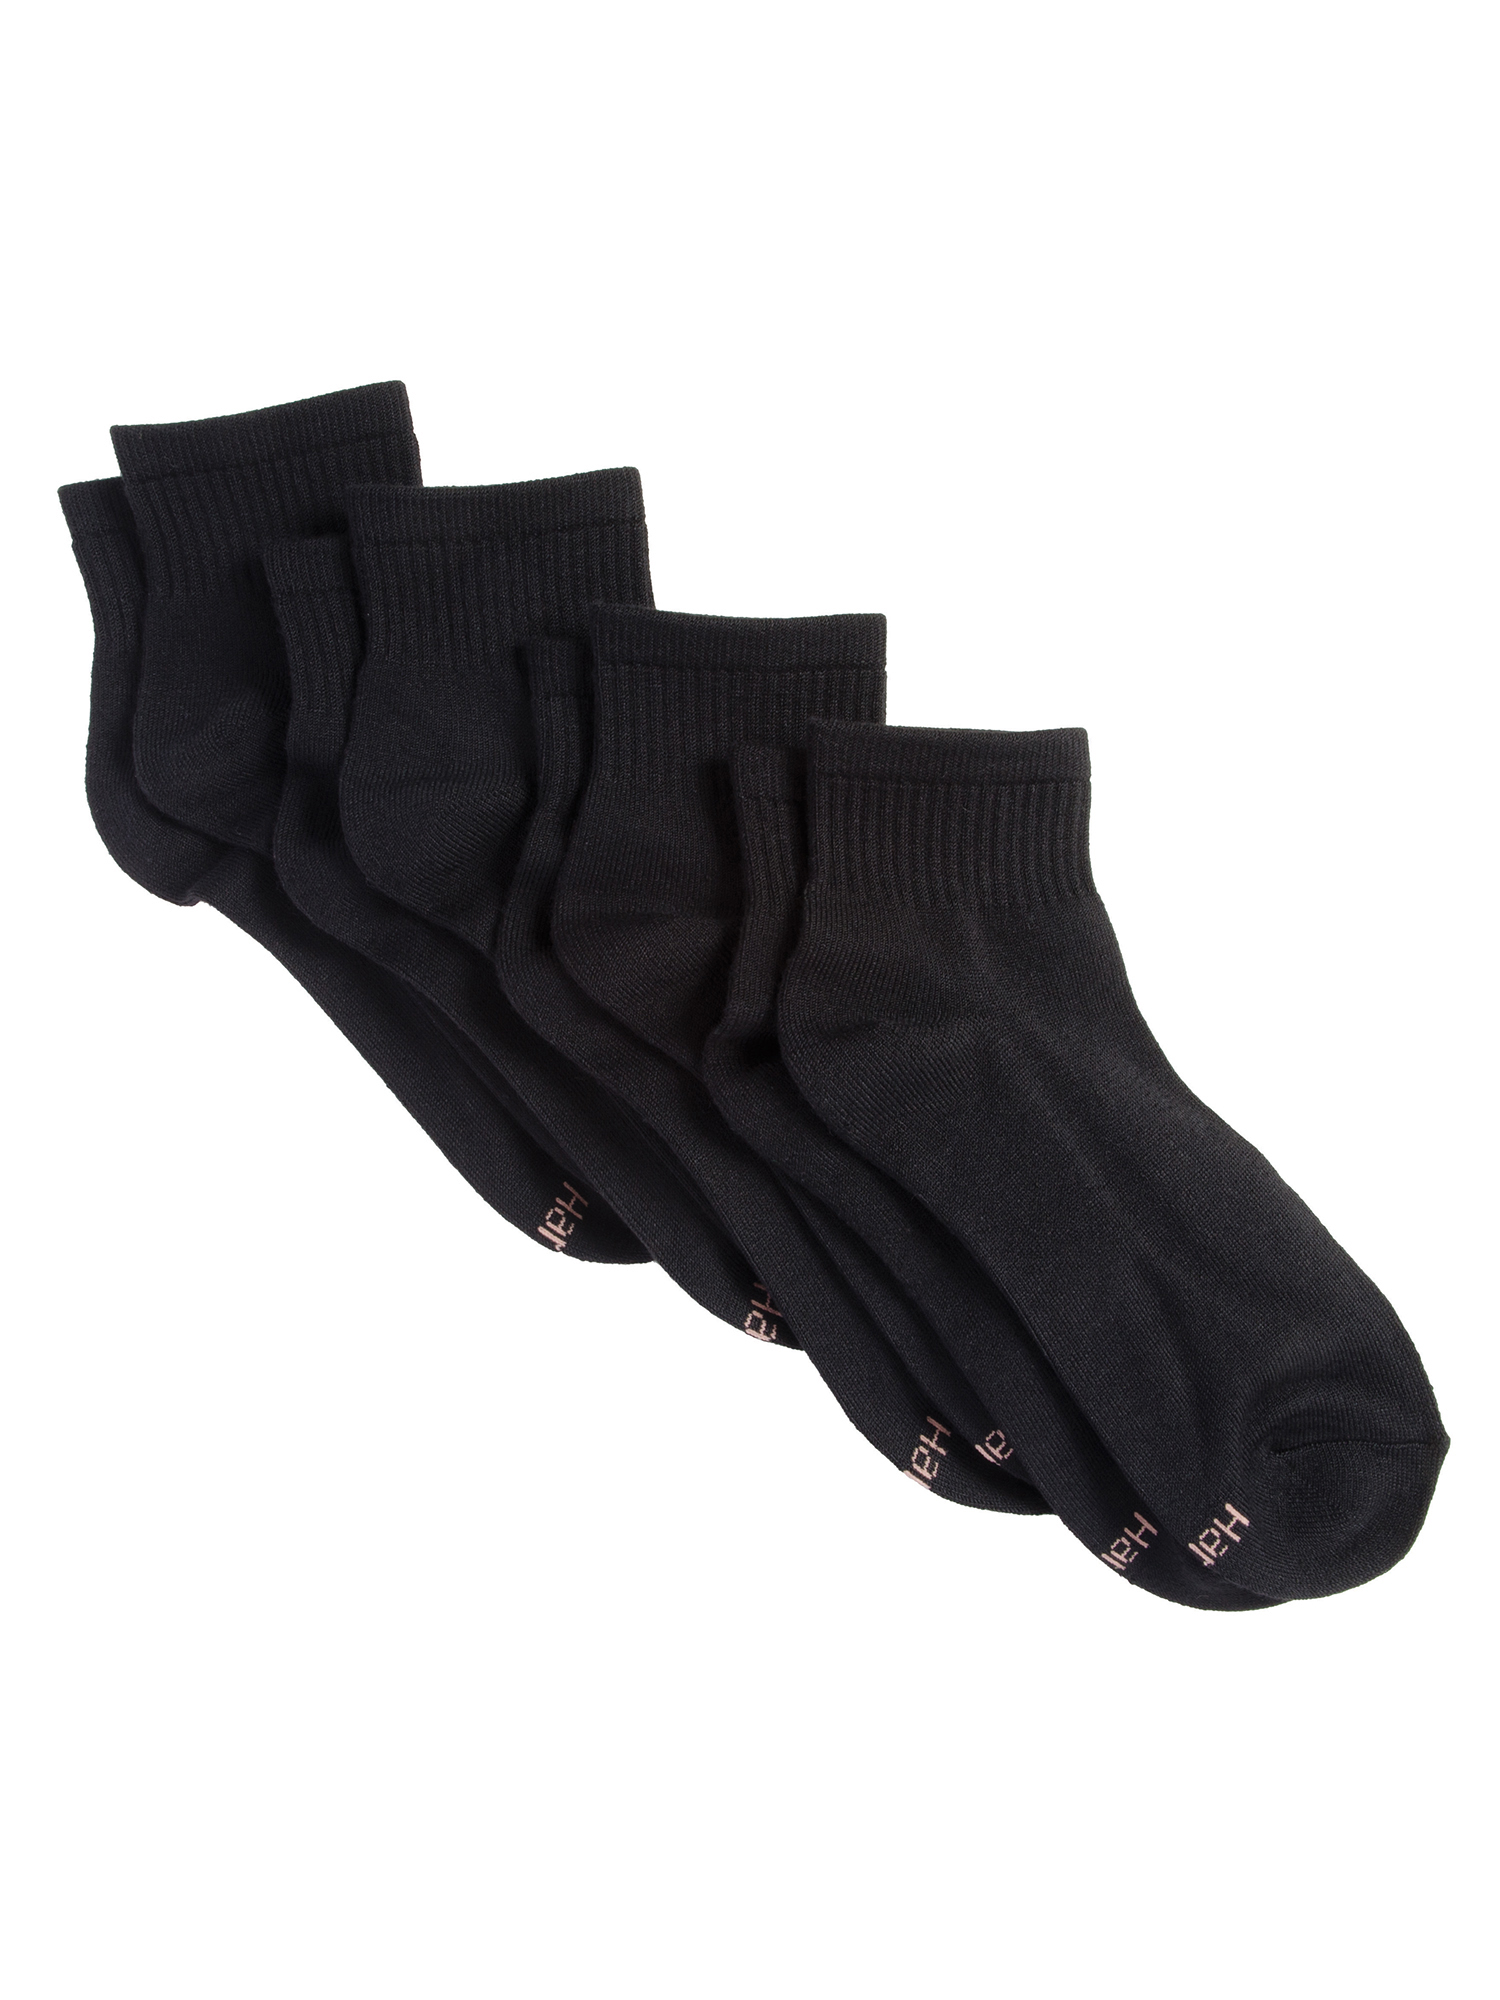 Womens ComfortSoft Ankle Socks - image 1 of 2